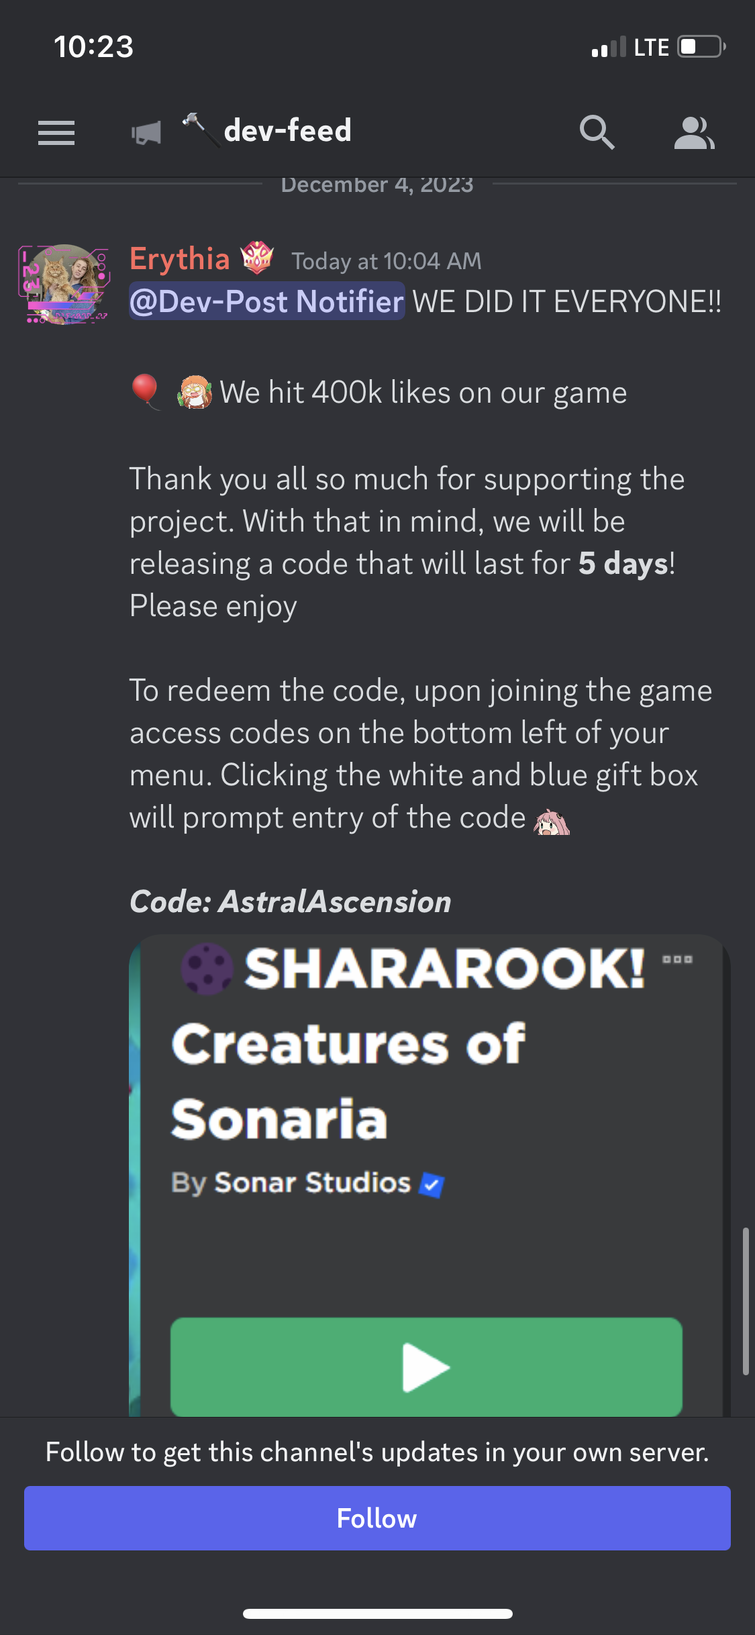 Creatures of Sonaria codes in 2023